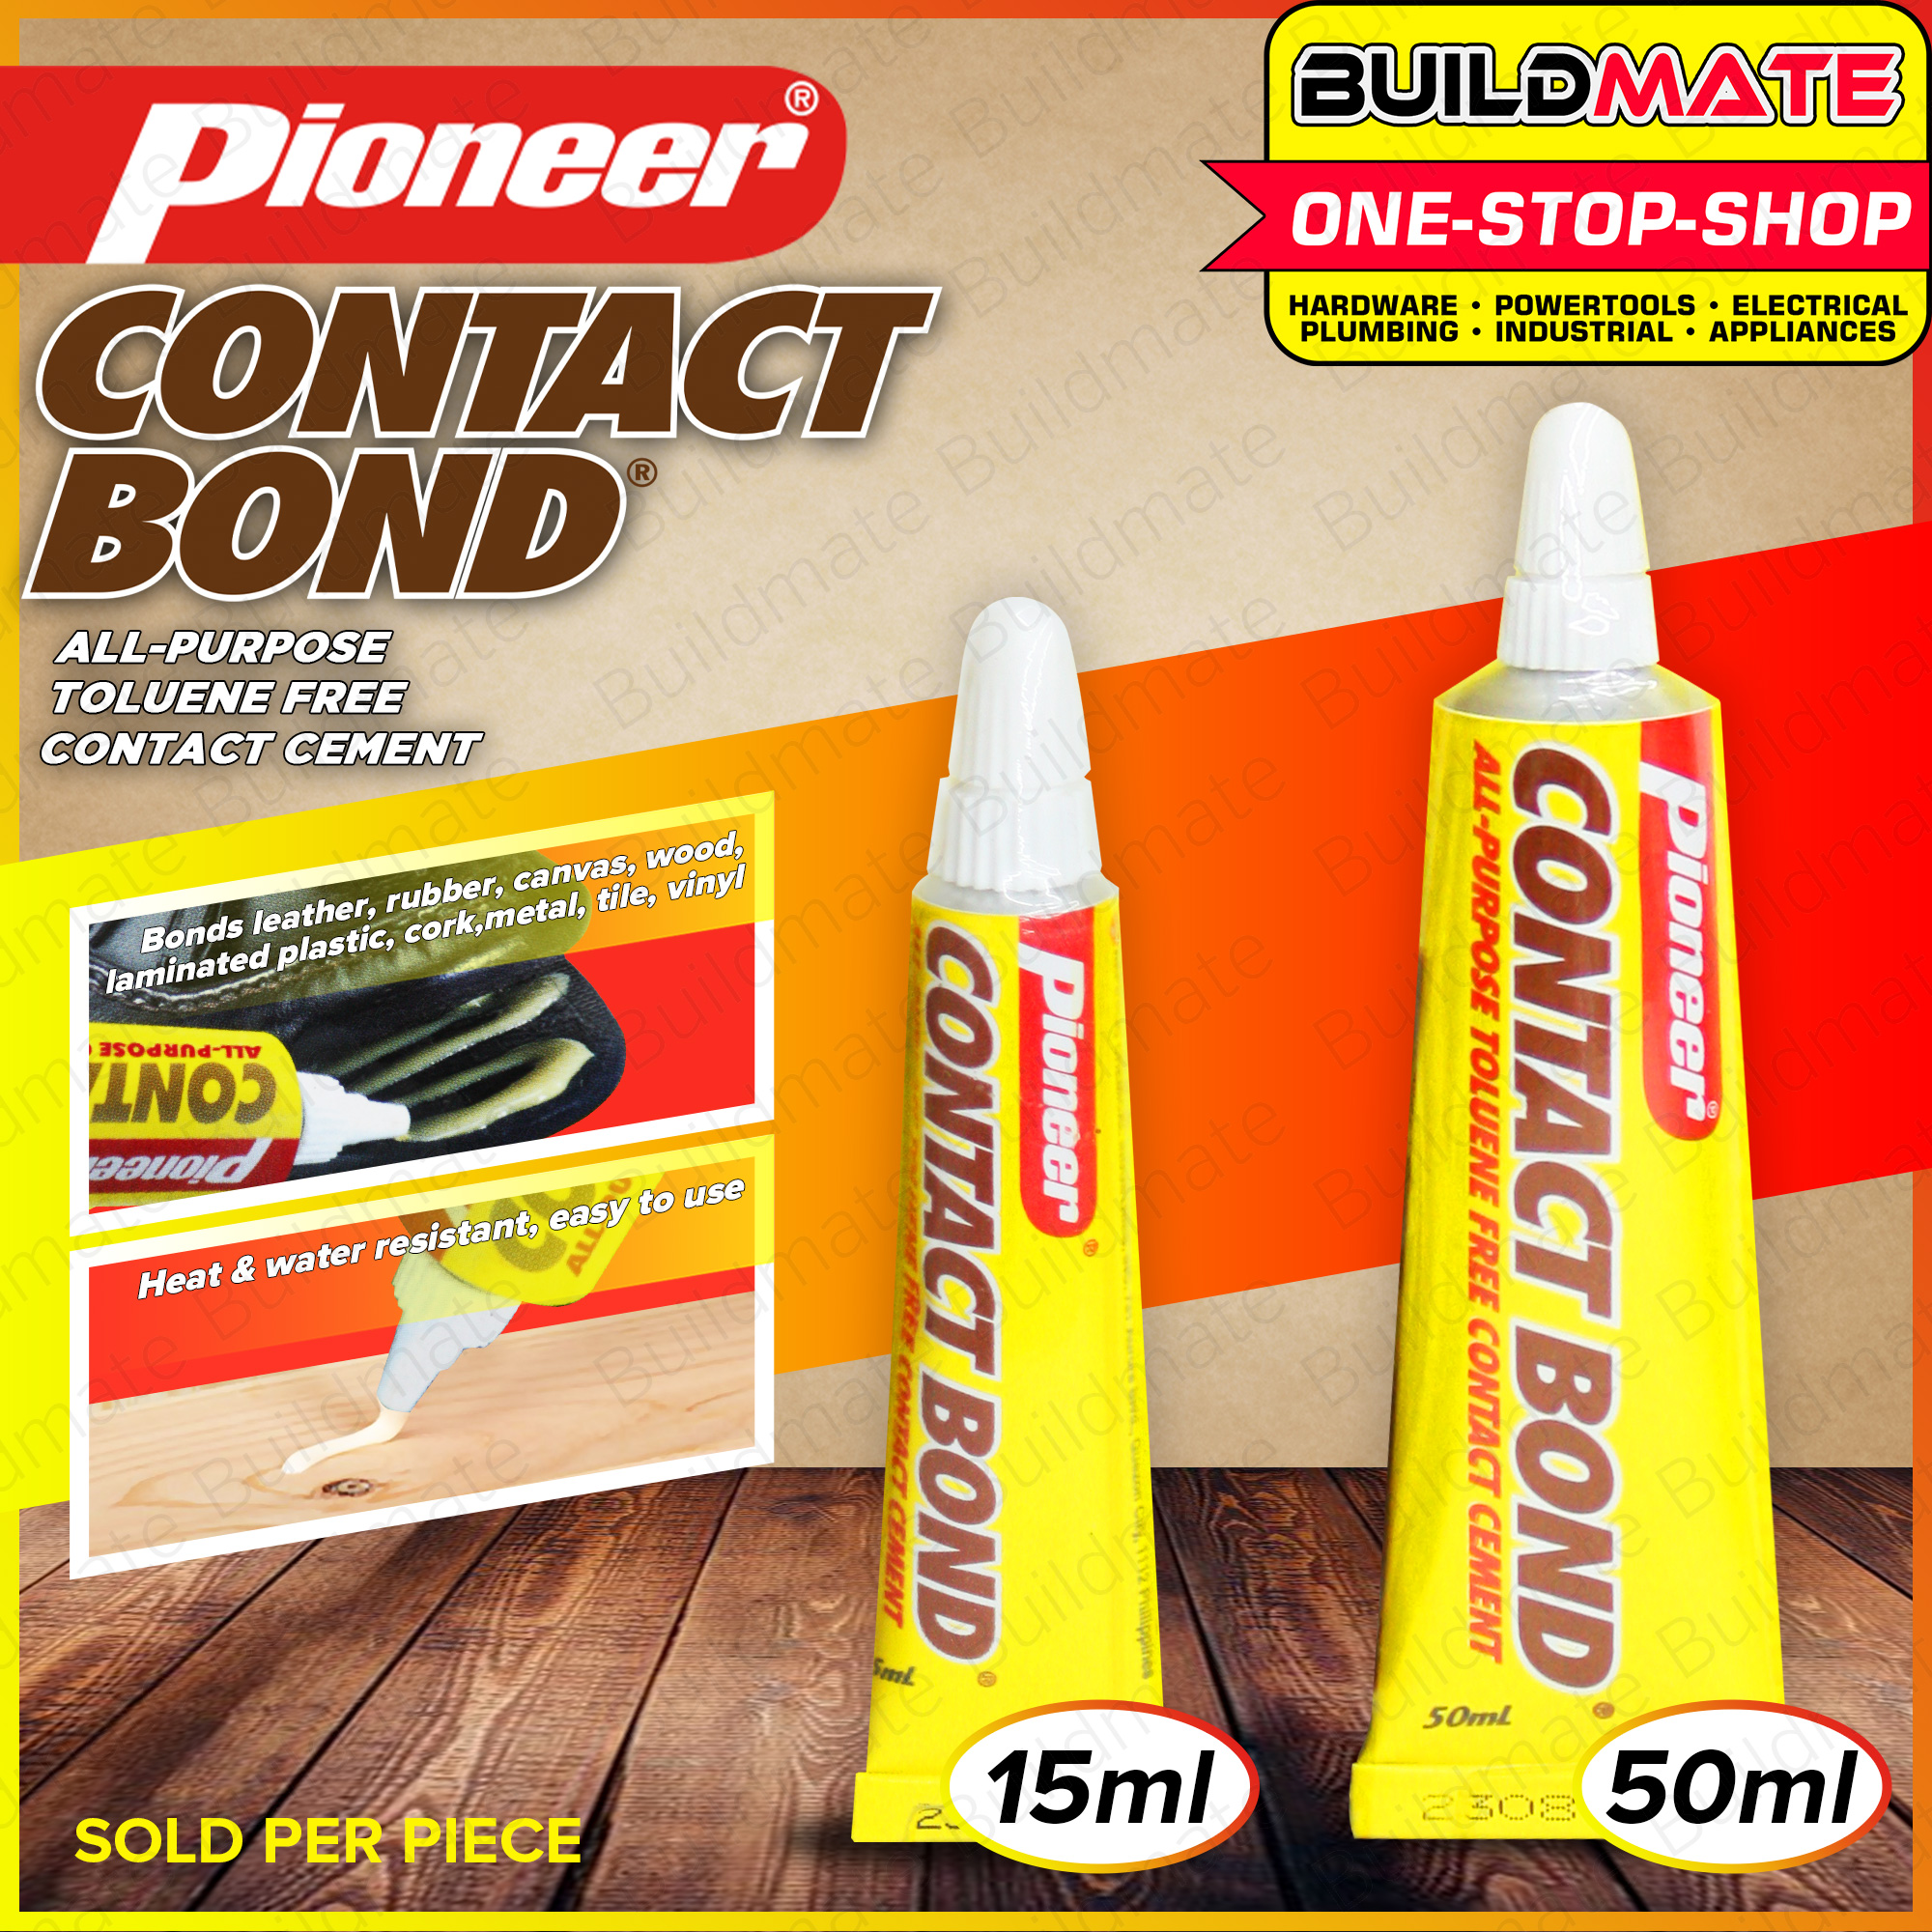 PIONEER Mighty Bond Shoes 3G Shoe Glue Instant Glue Shoe Repair Liquid —  Buildmate